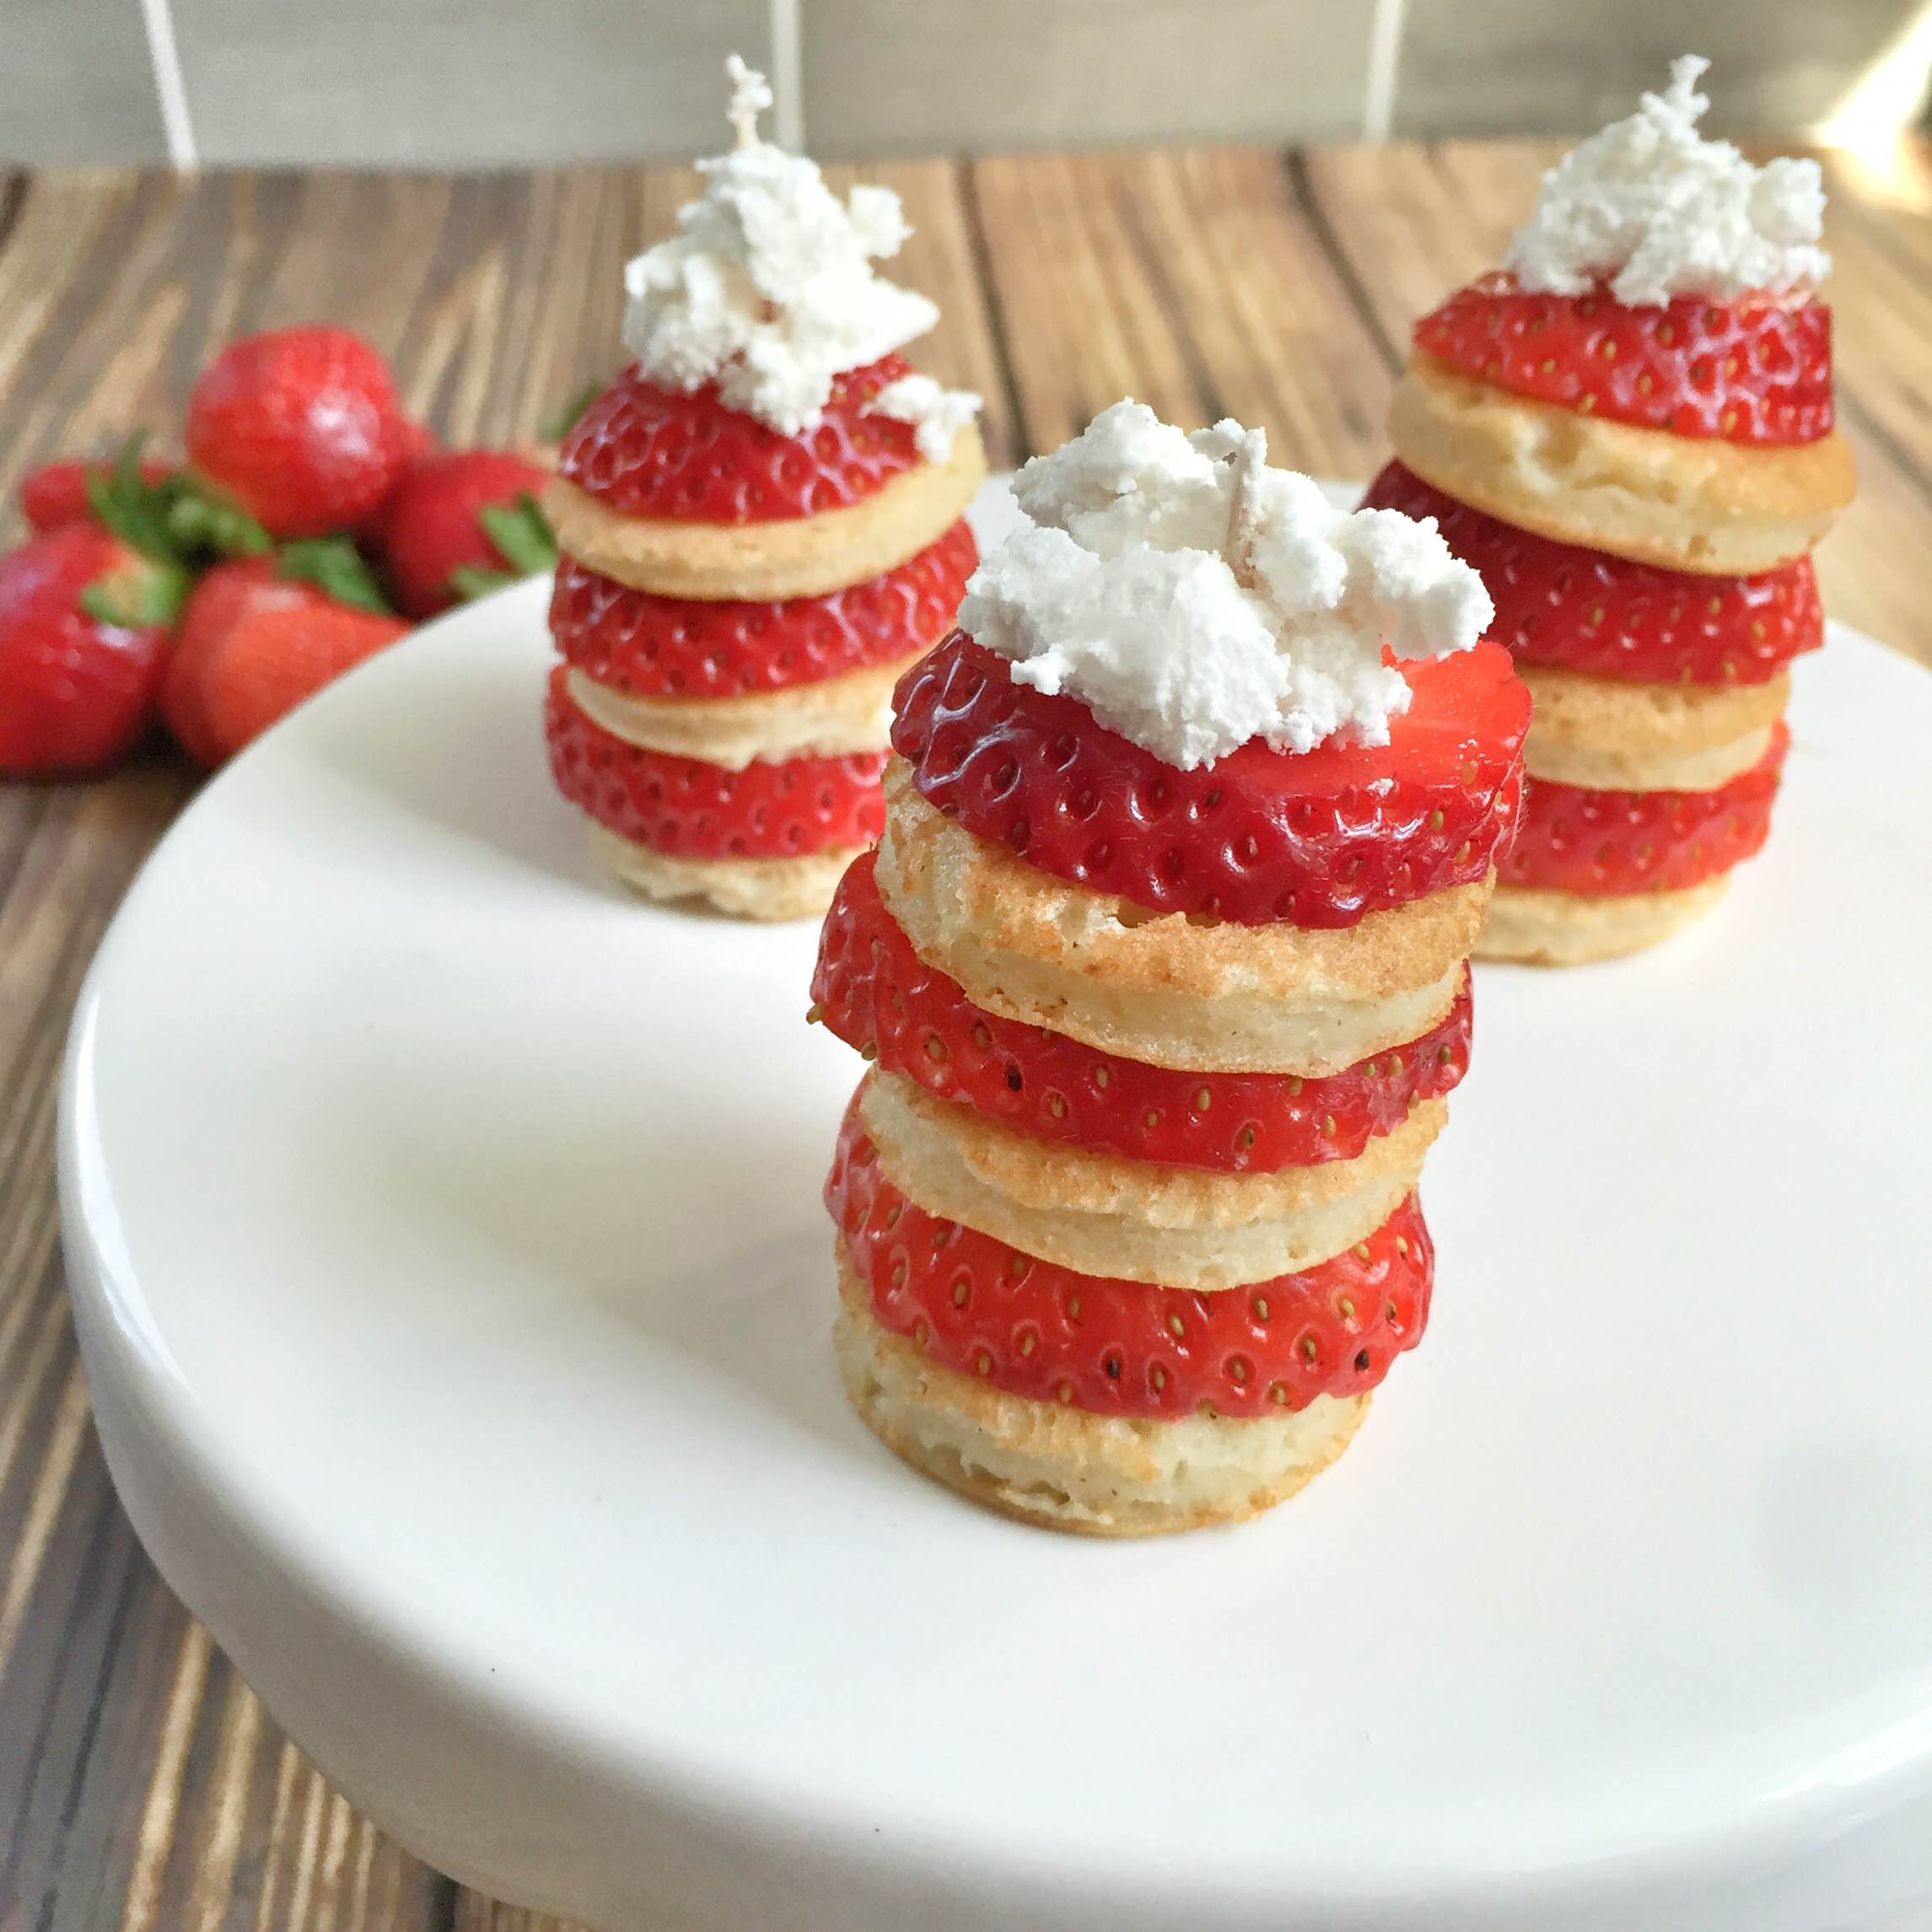 Strawberry shortcake pancake kabobs | pancake kabob recipe | strawberry shortcake breakfast ideas | GinaKirk.com @ginaekirk